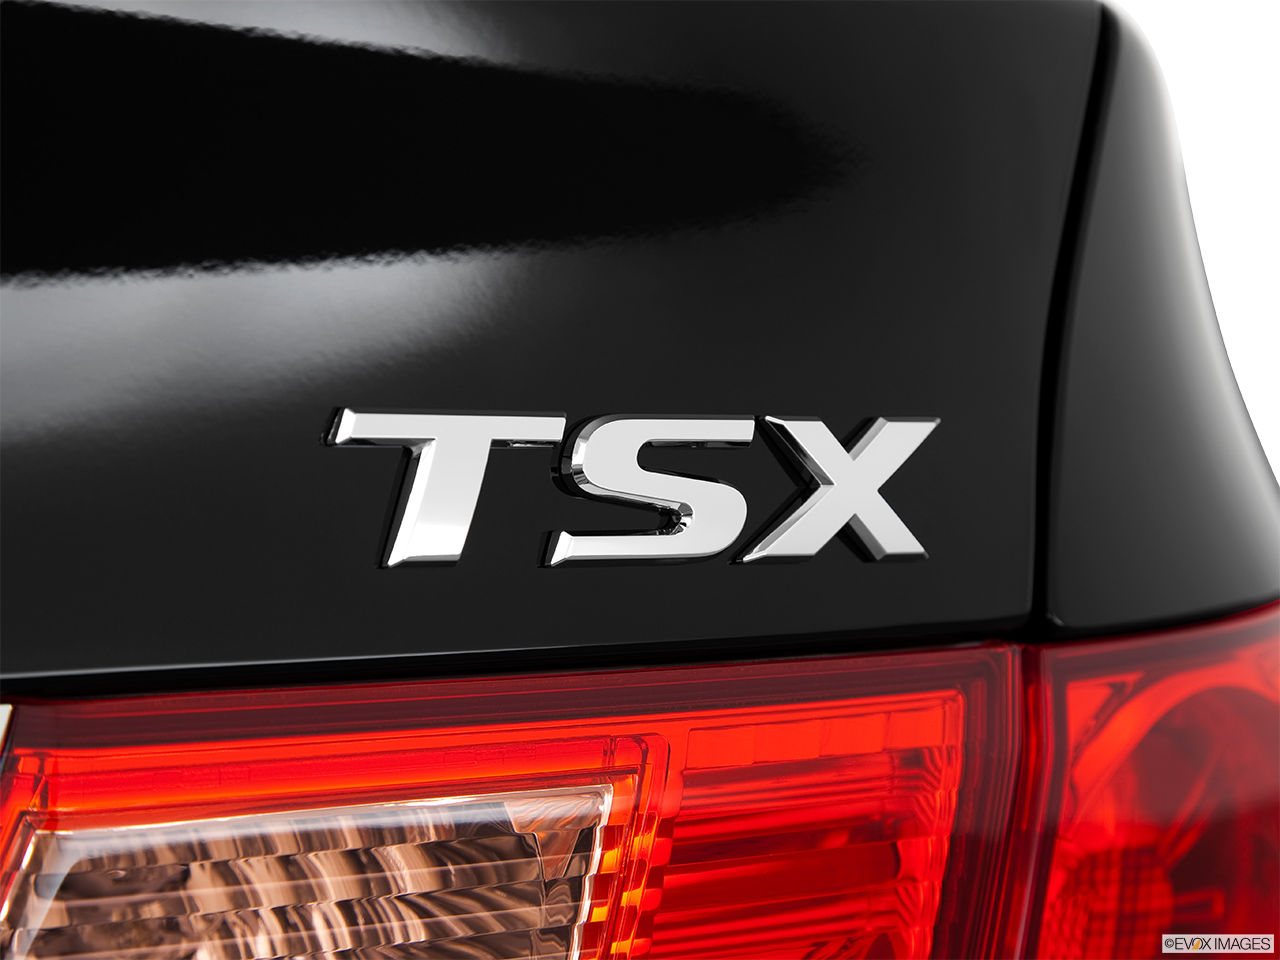 2014 Acura TSX 5-speed Automatic Rear model badge/emblem 